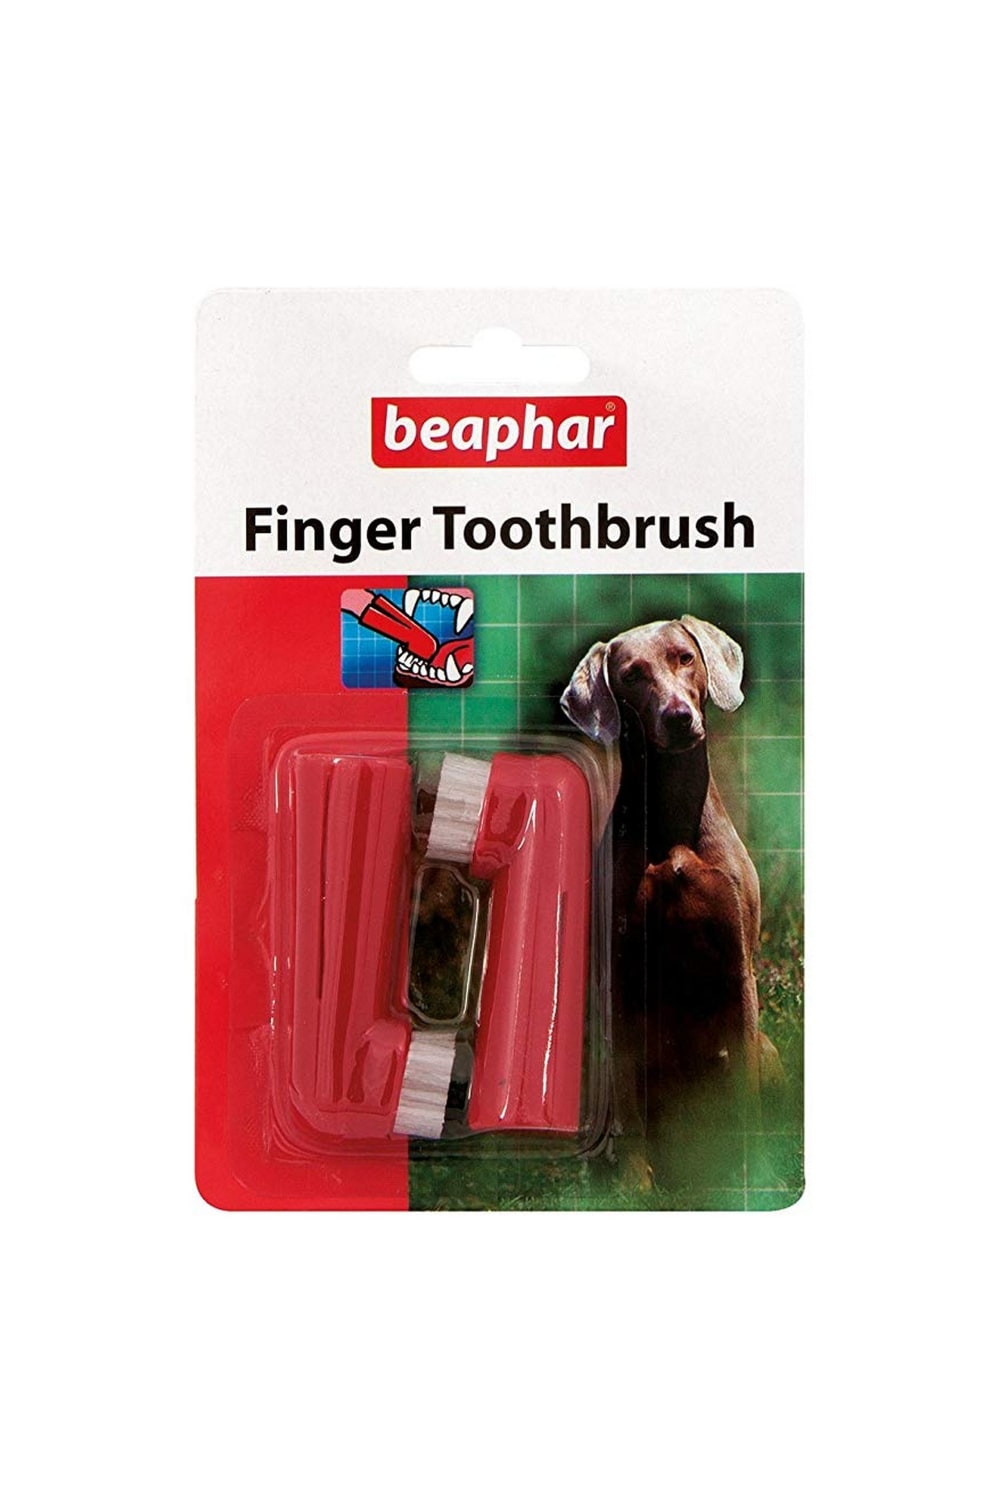 Beaphar Finger Toothbrush (2 Pack) (May vary) (One Size)